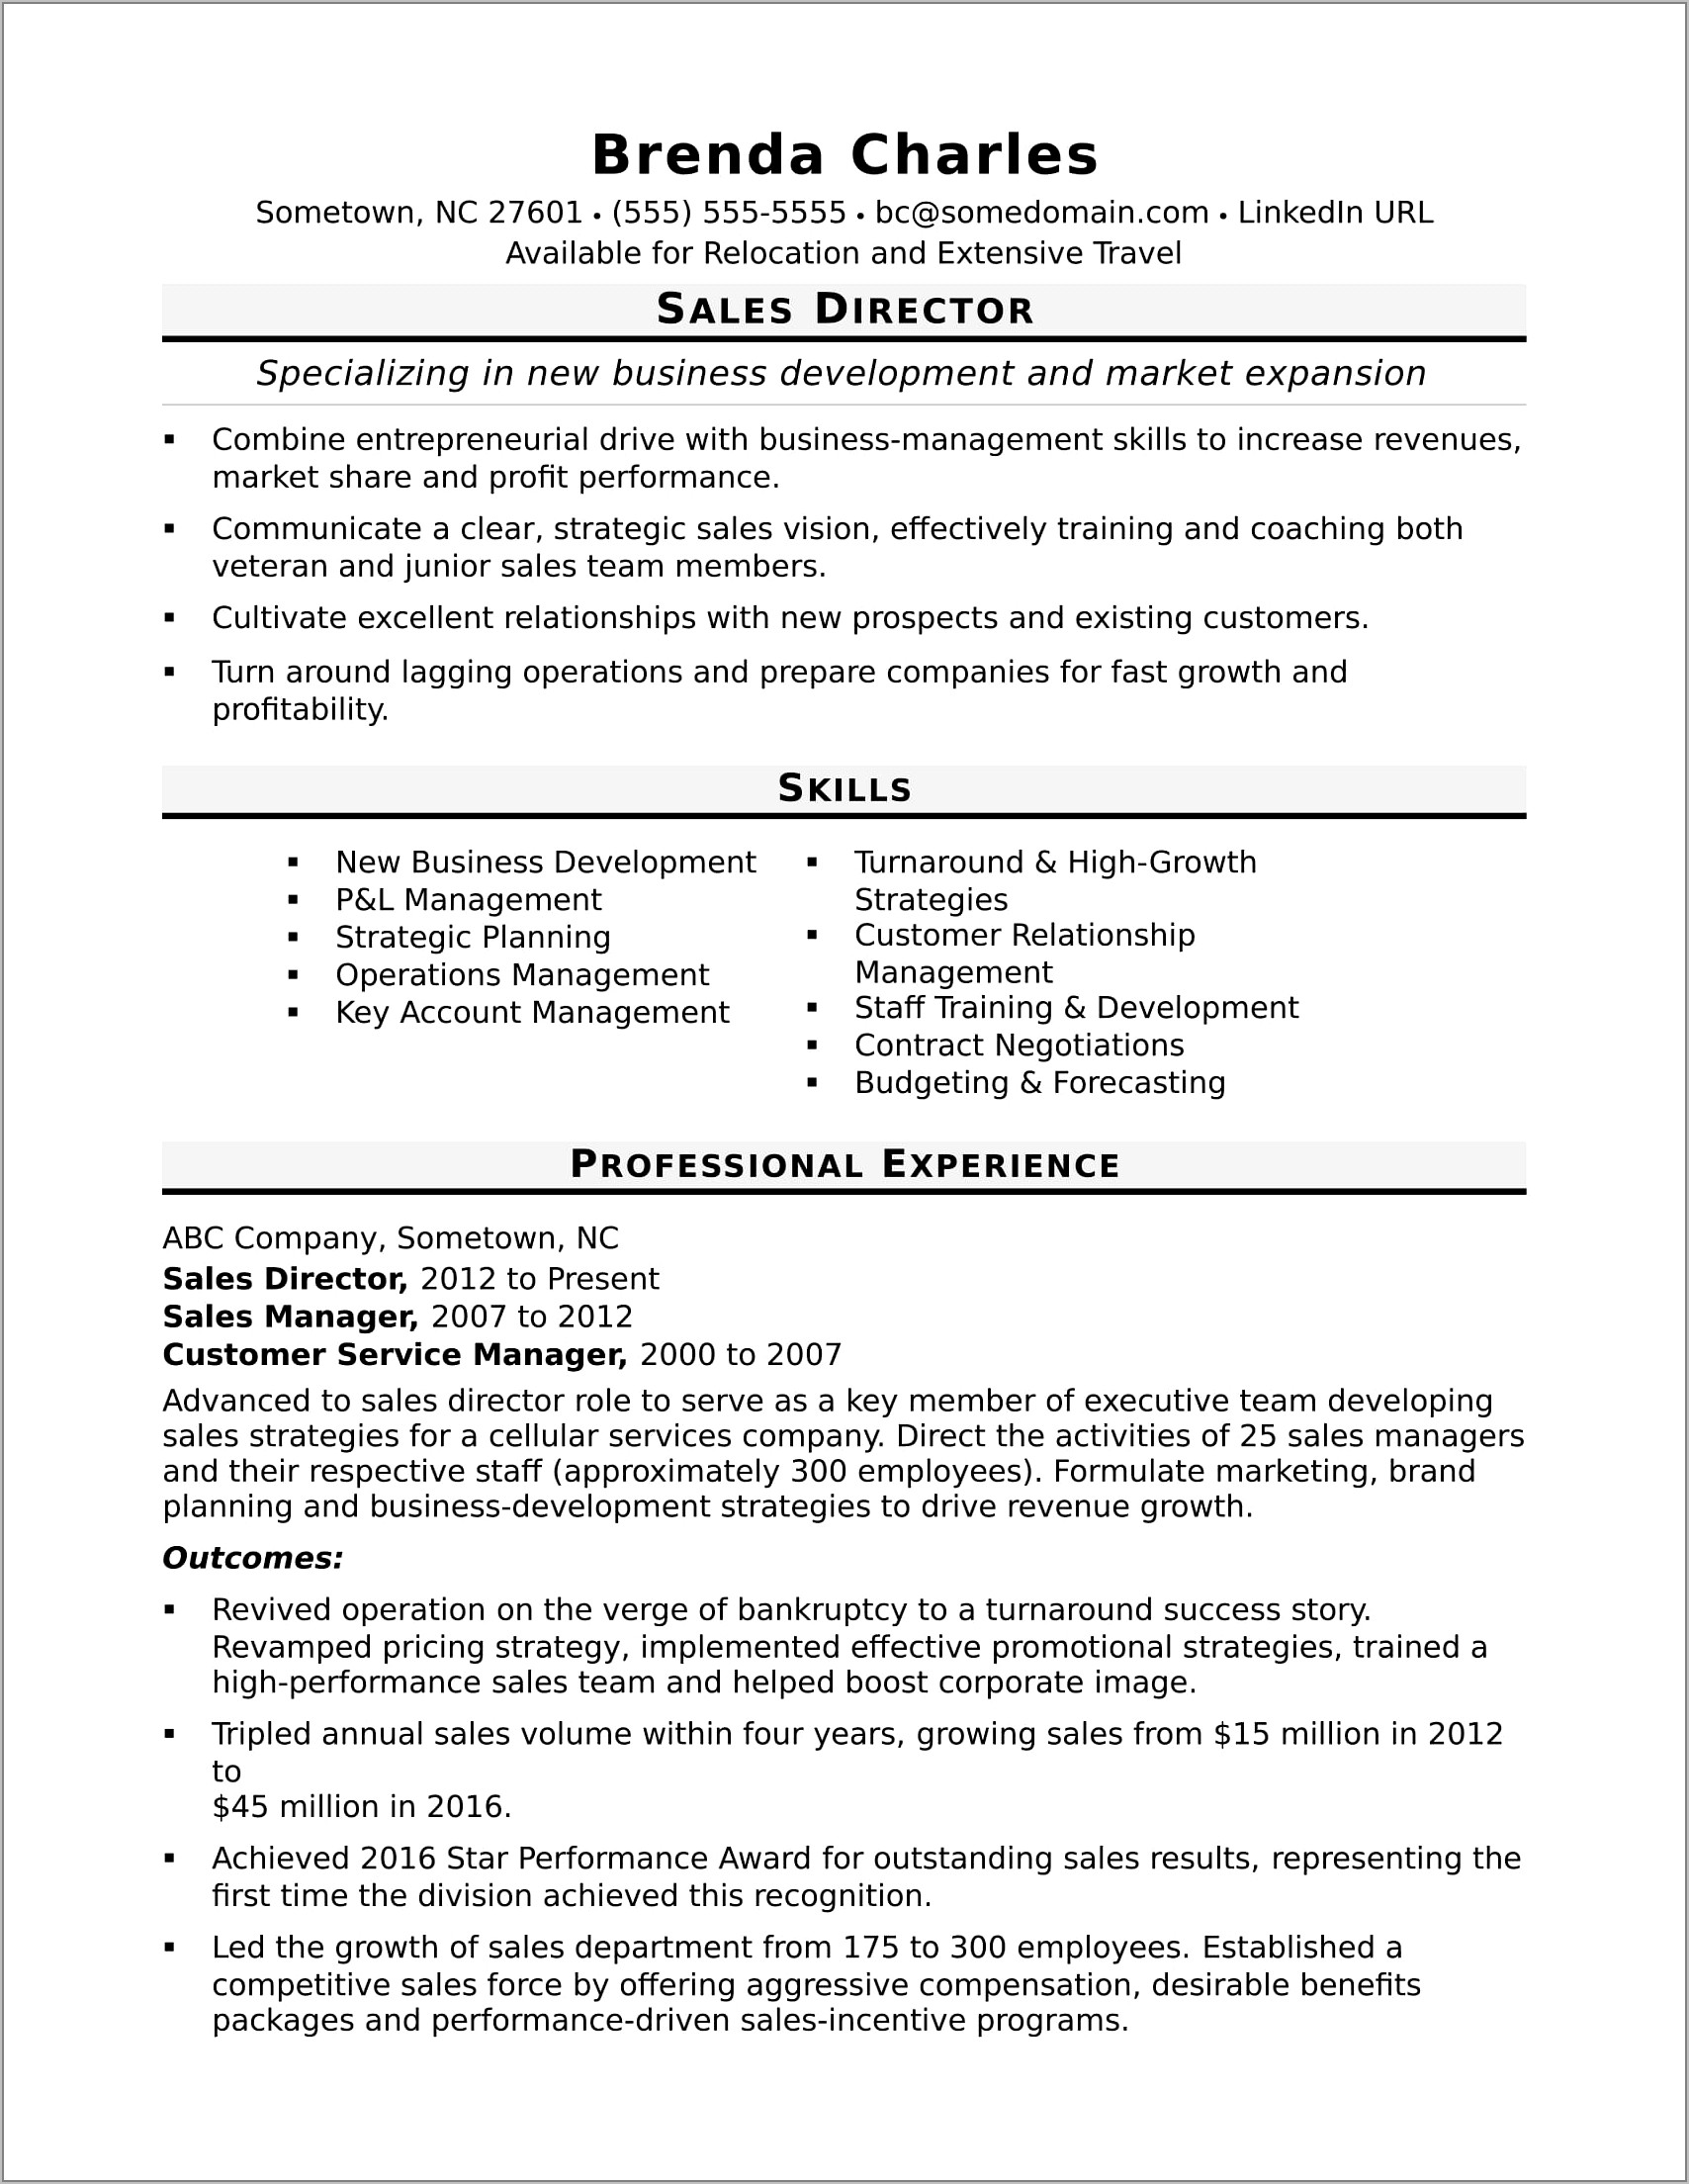 Sample Resume For Sales Director